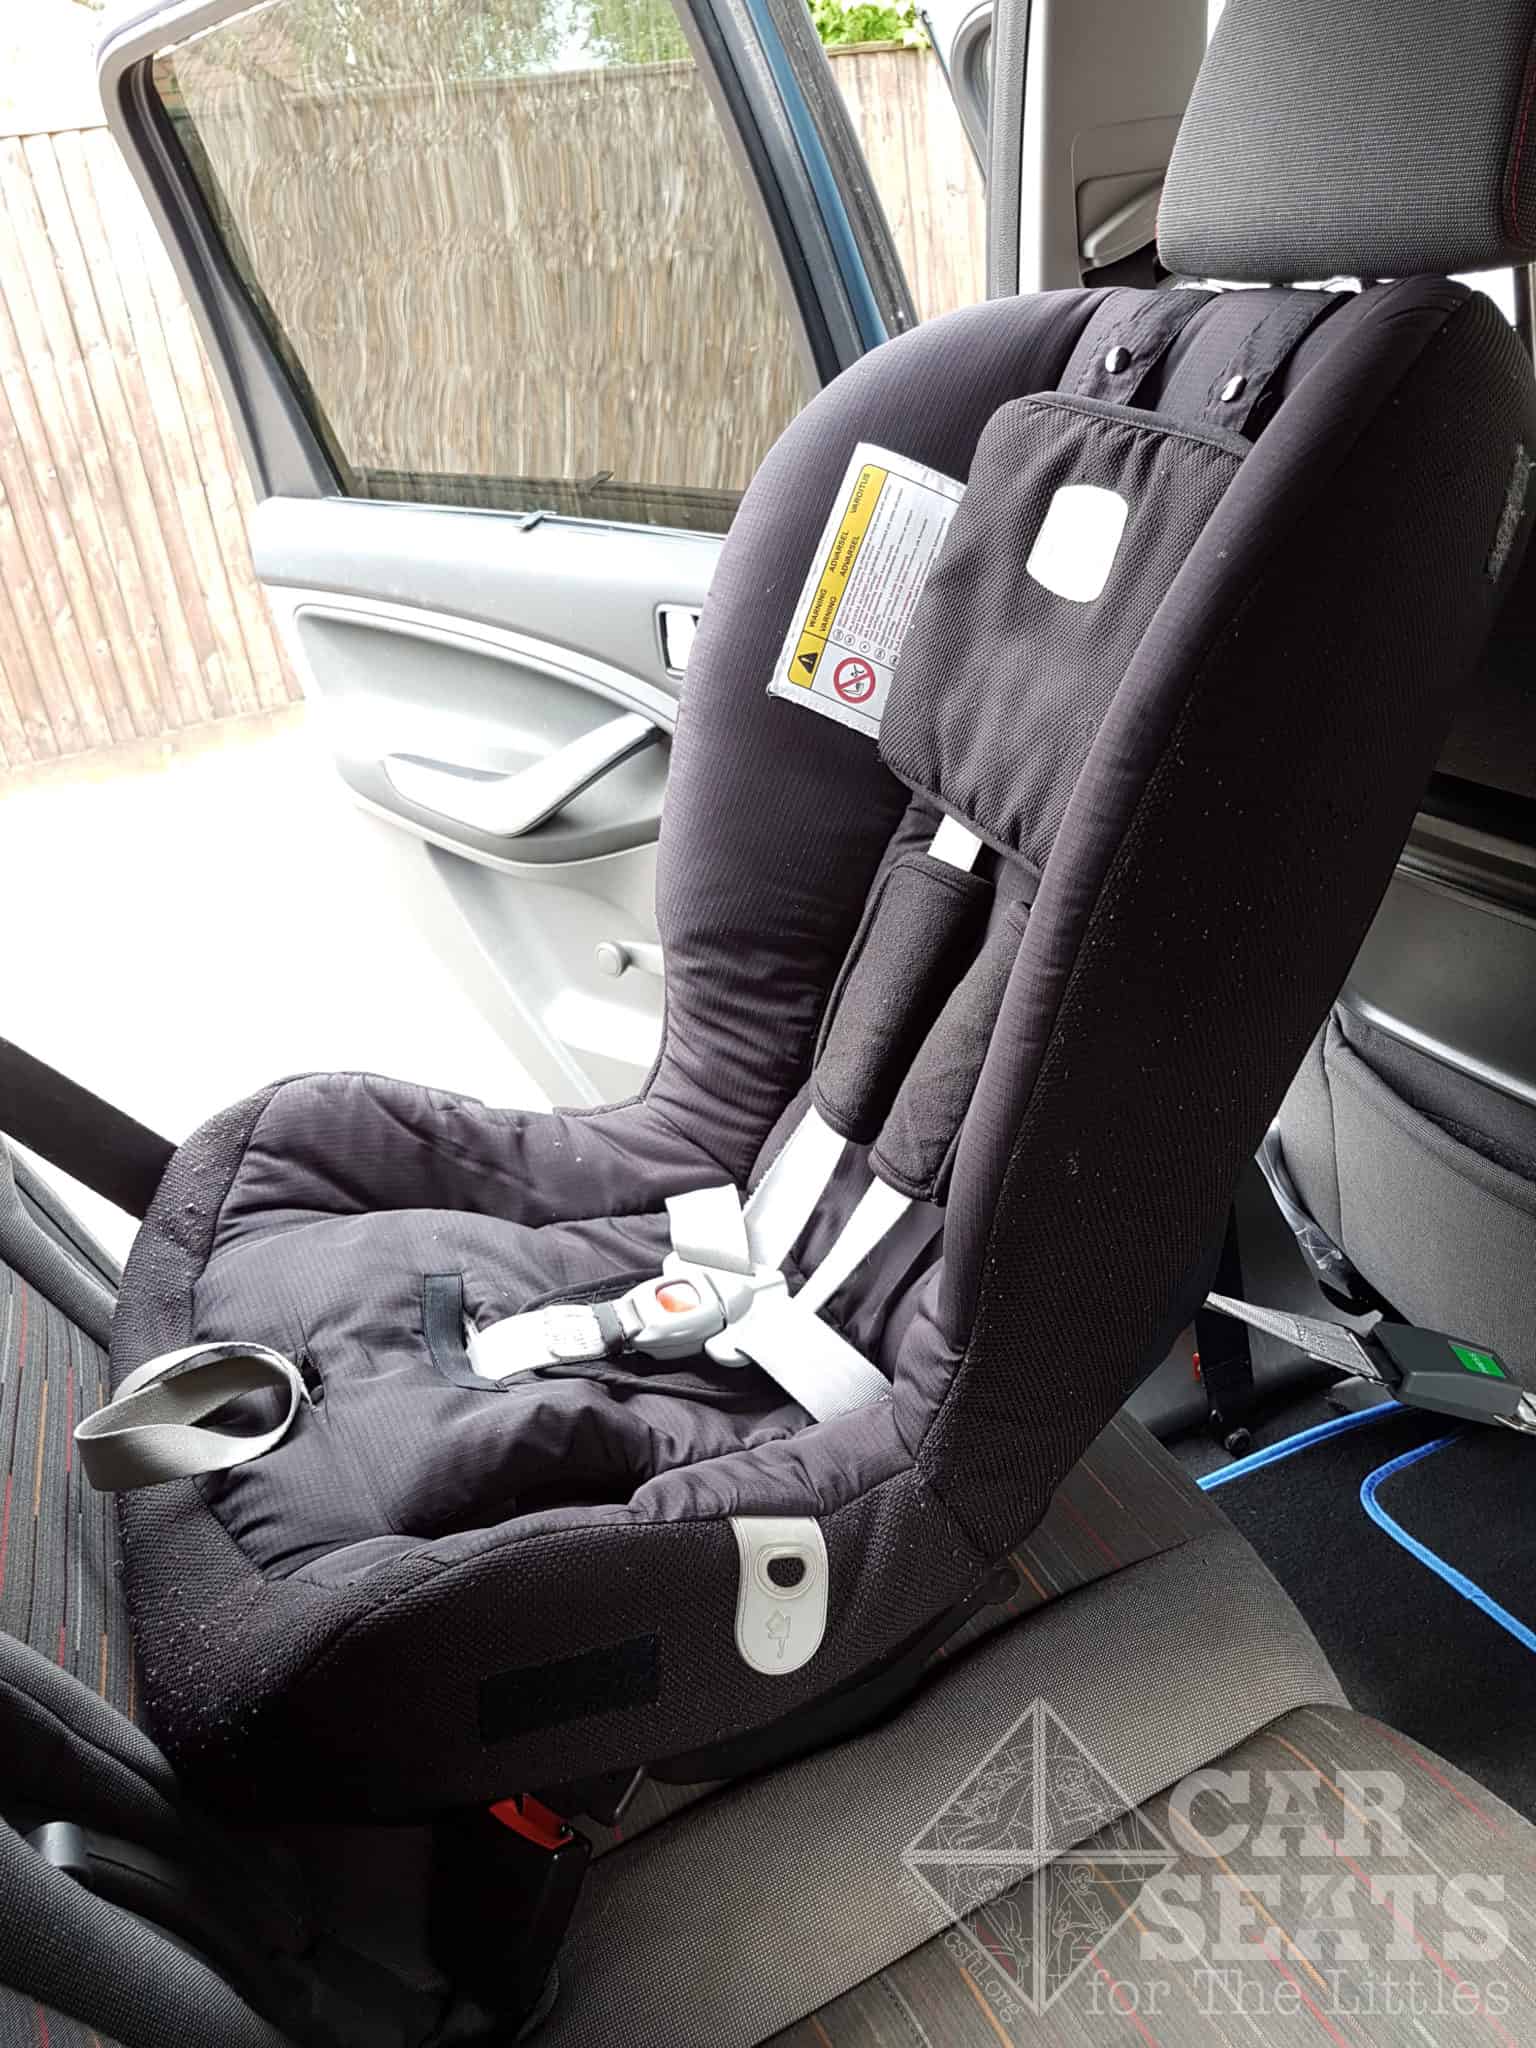 Gymnast Glad Misforståelse Britax Two Way Elite Review - EU Car Seat - Car Seats For The Littles